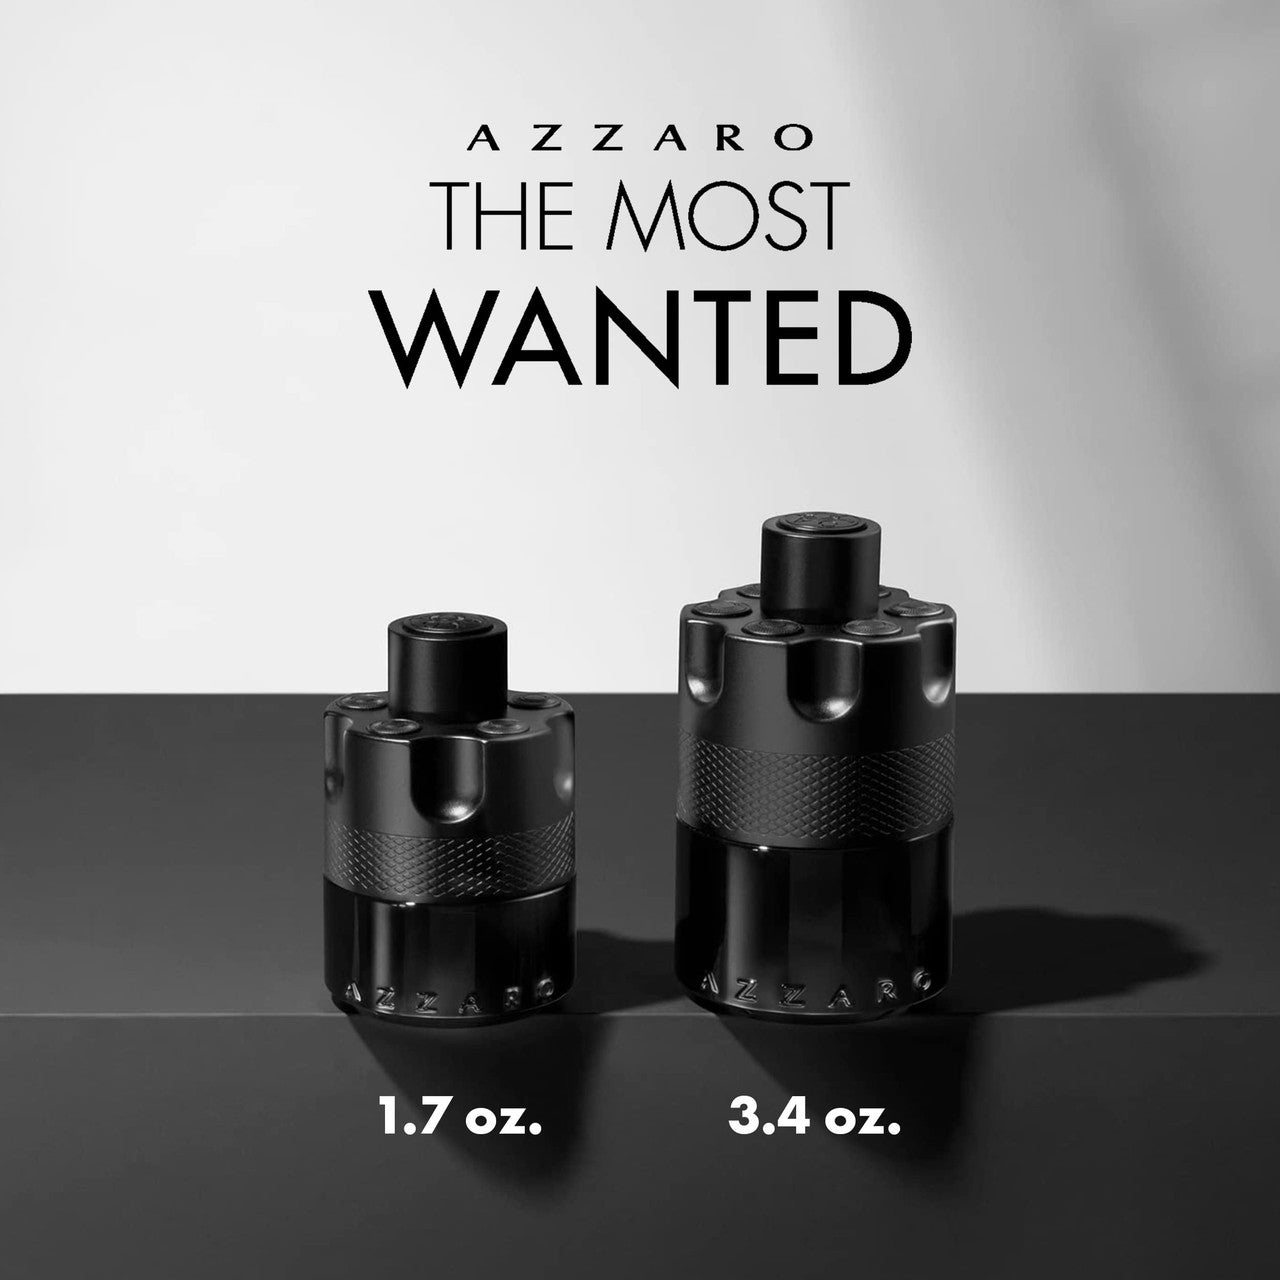 Azzaro The Most Wanted EDP Intense | My Perfume Shop Australia